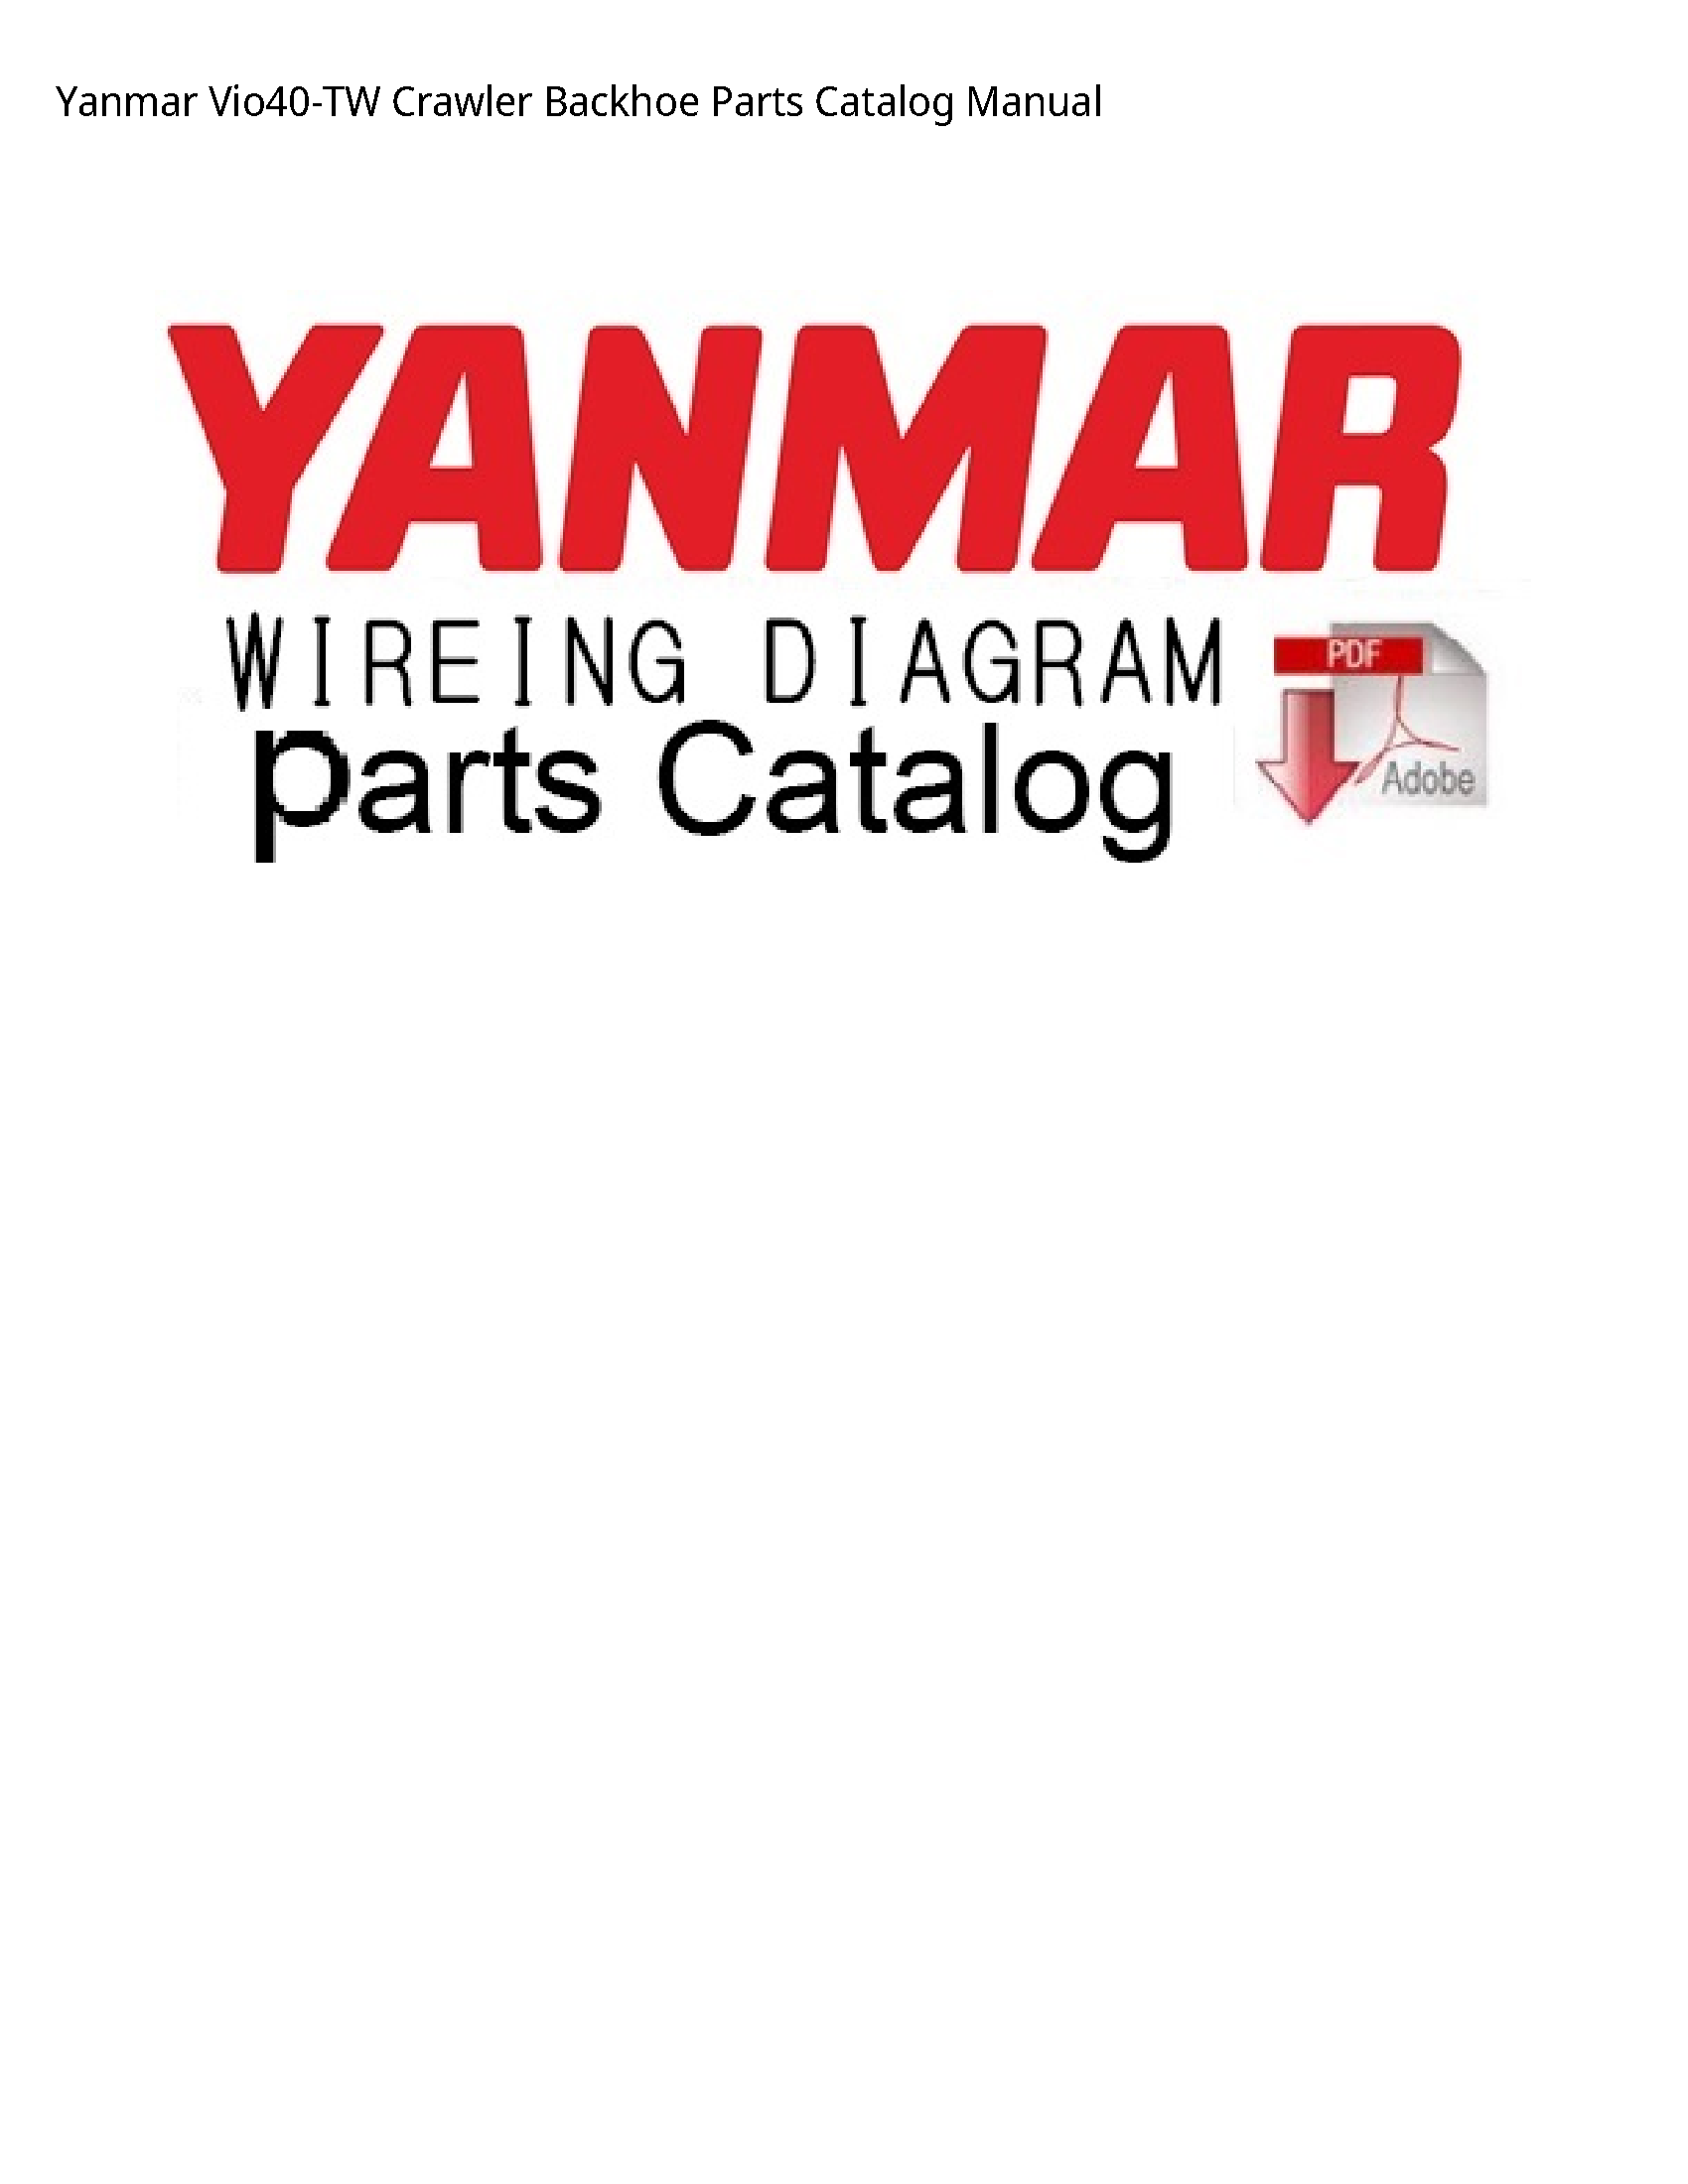 Yanmar Vio40-TW Crawler Backhoe Parts Catalog manual